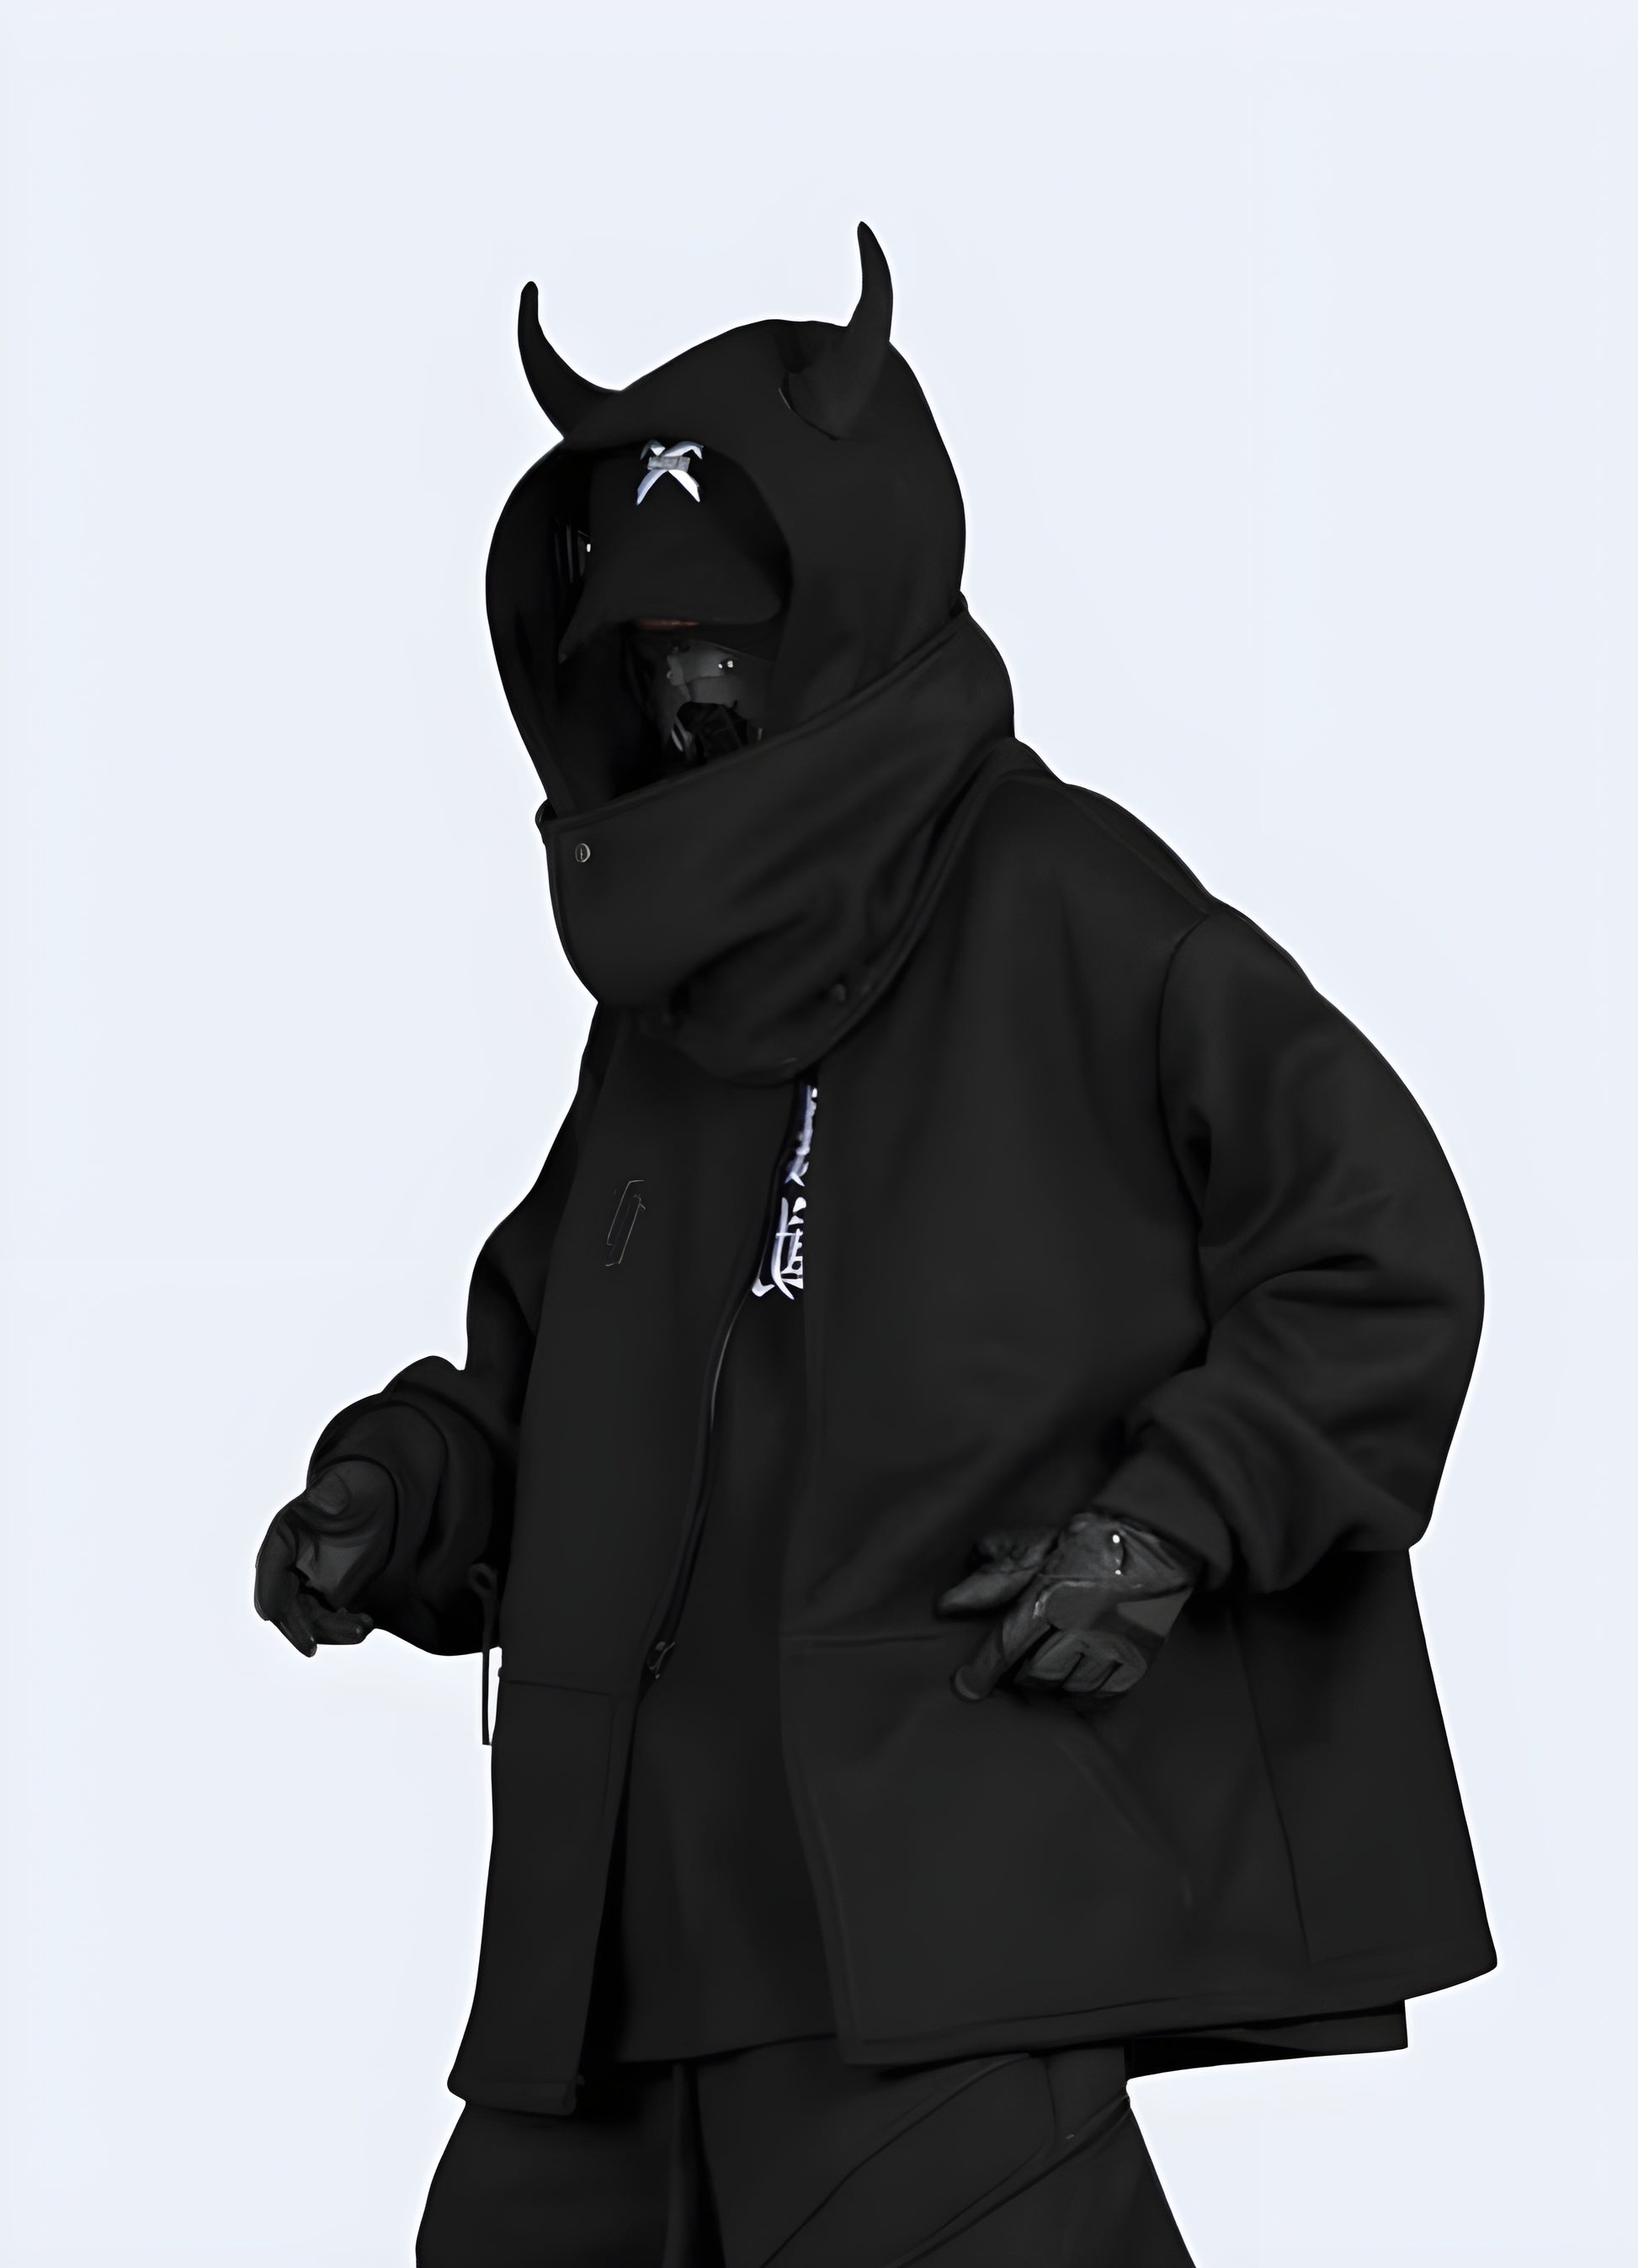 Cyberpunk, military, futuristic design black hoodie with horns.